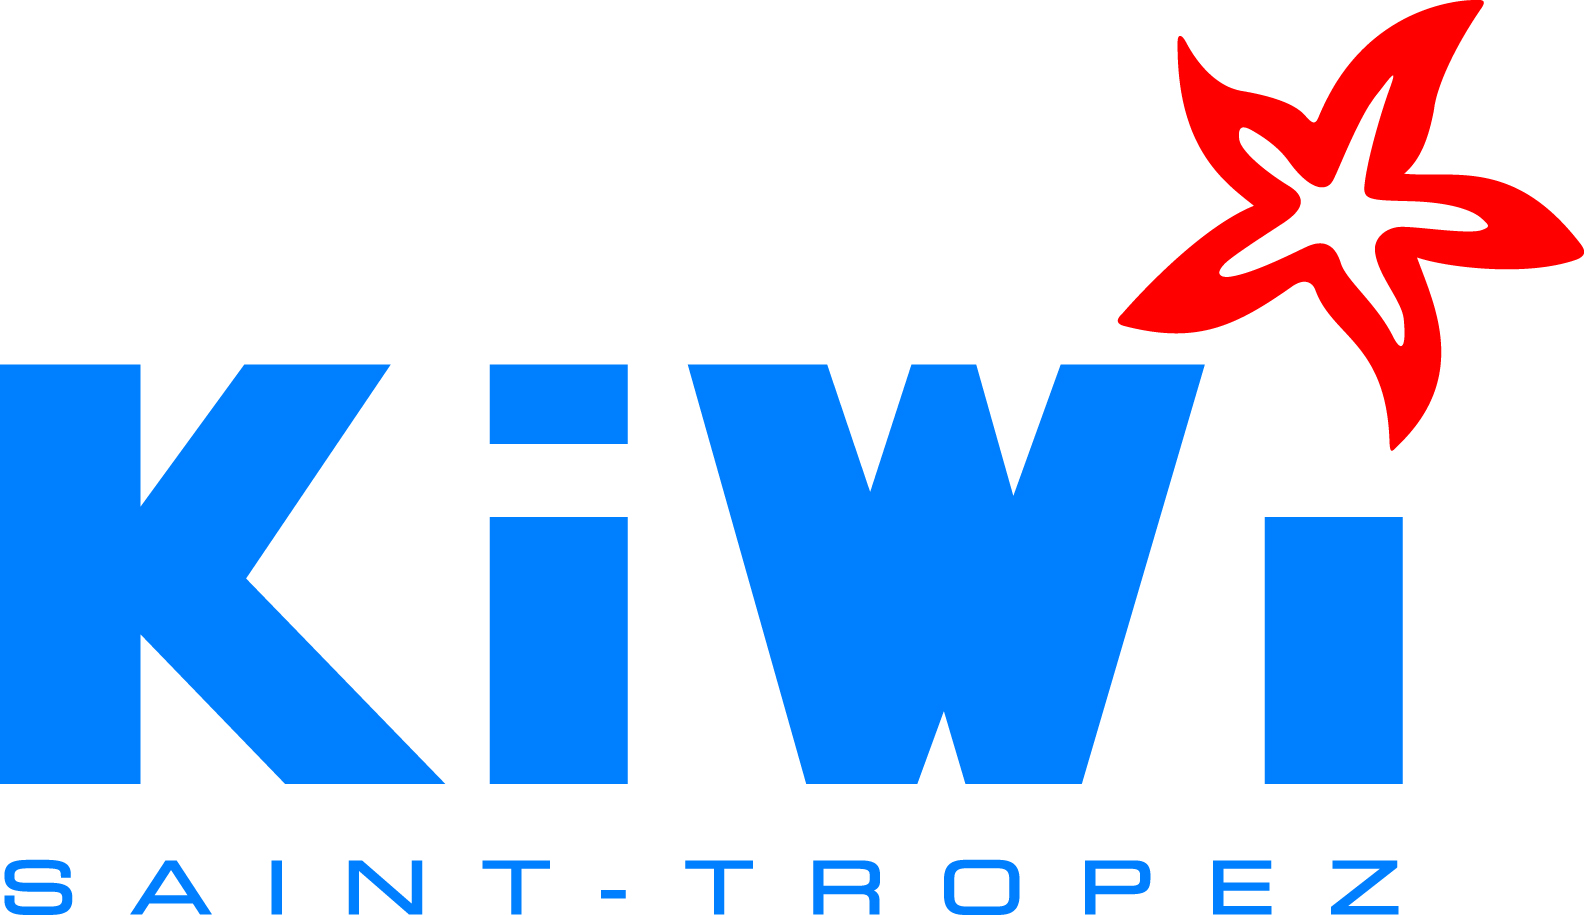 Kiwi St. Tropez logo